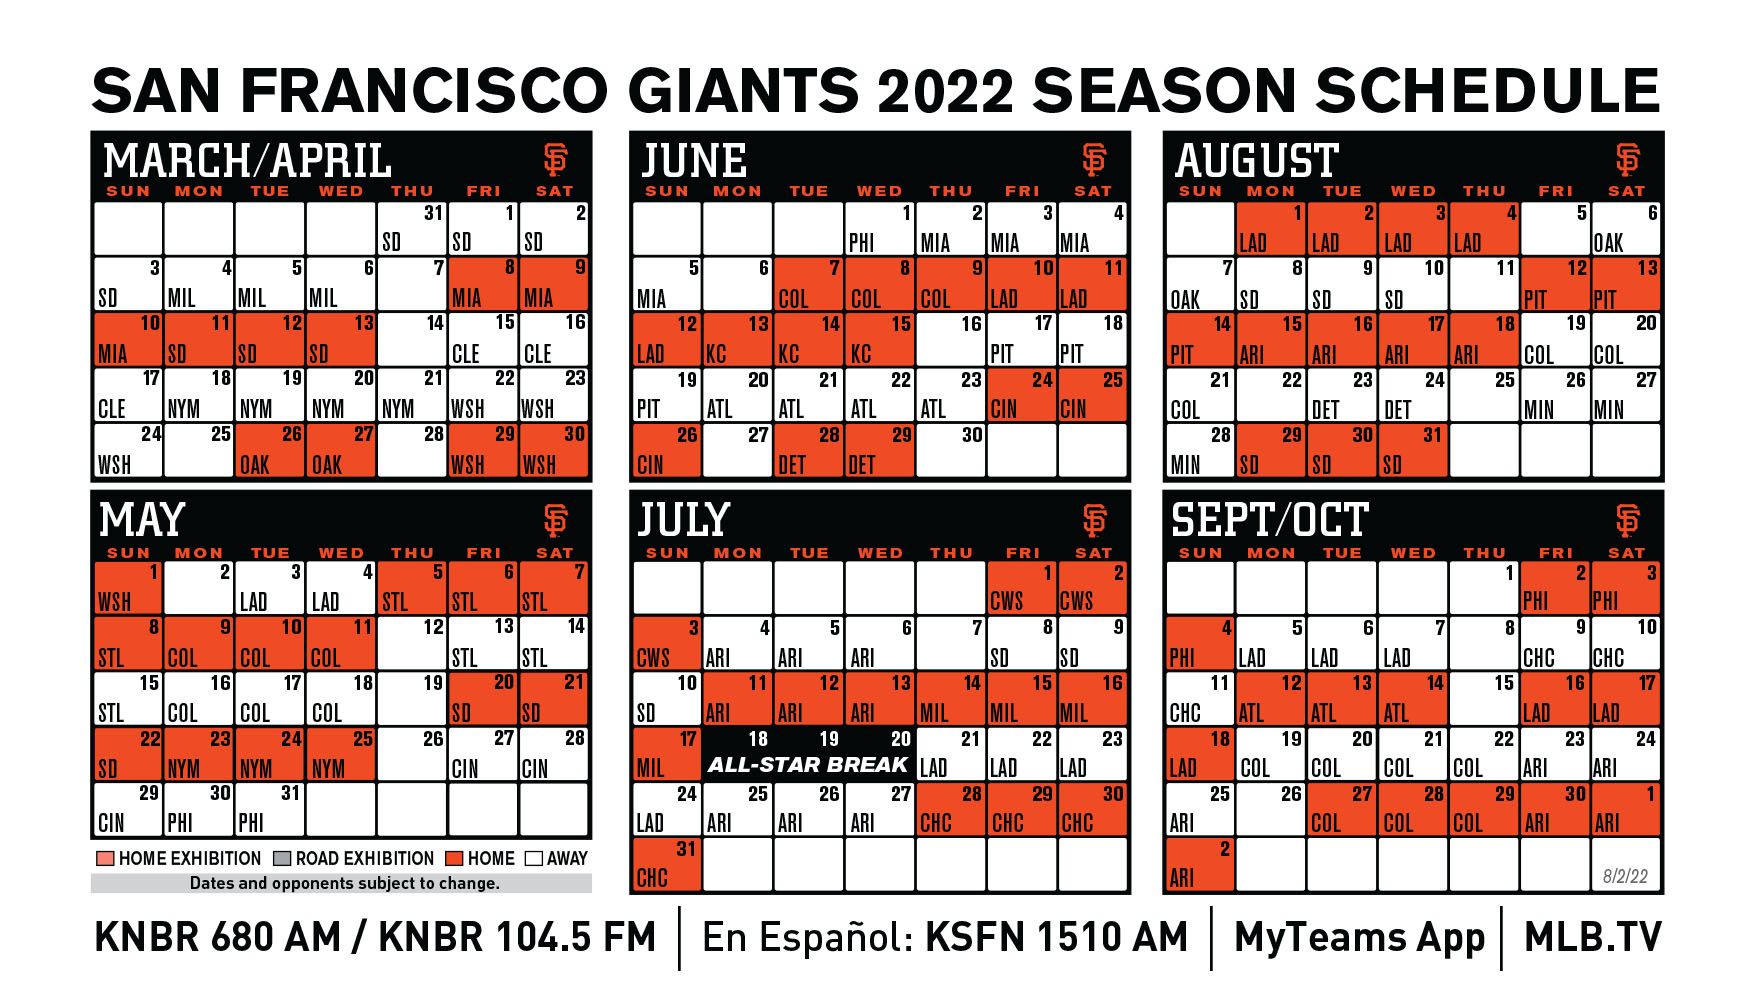 ny giants 2022 schedule